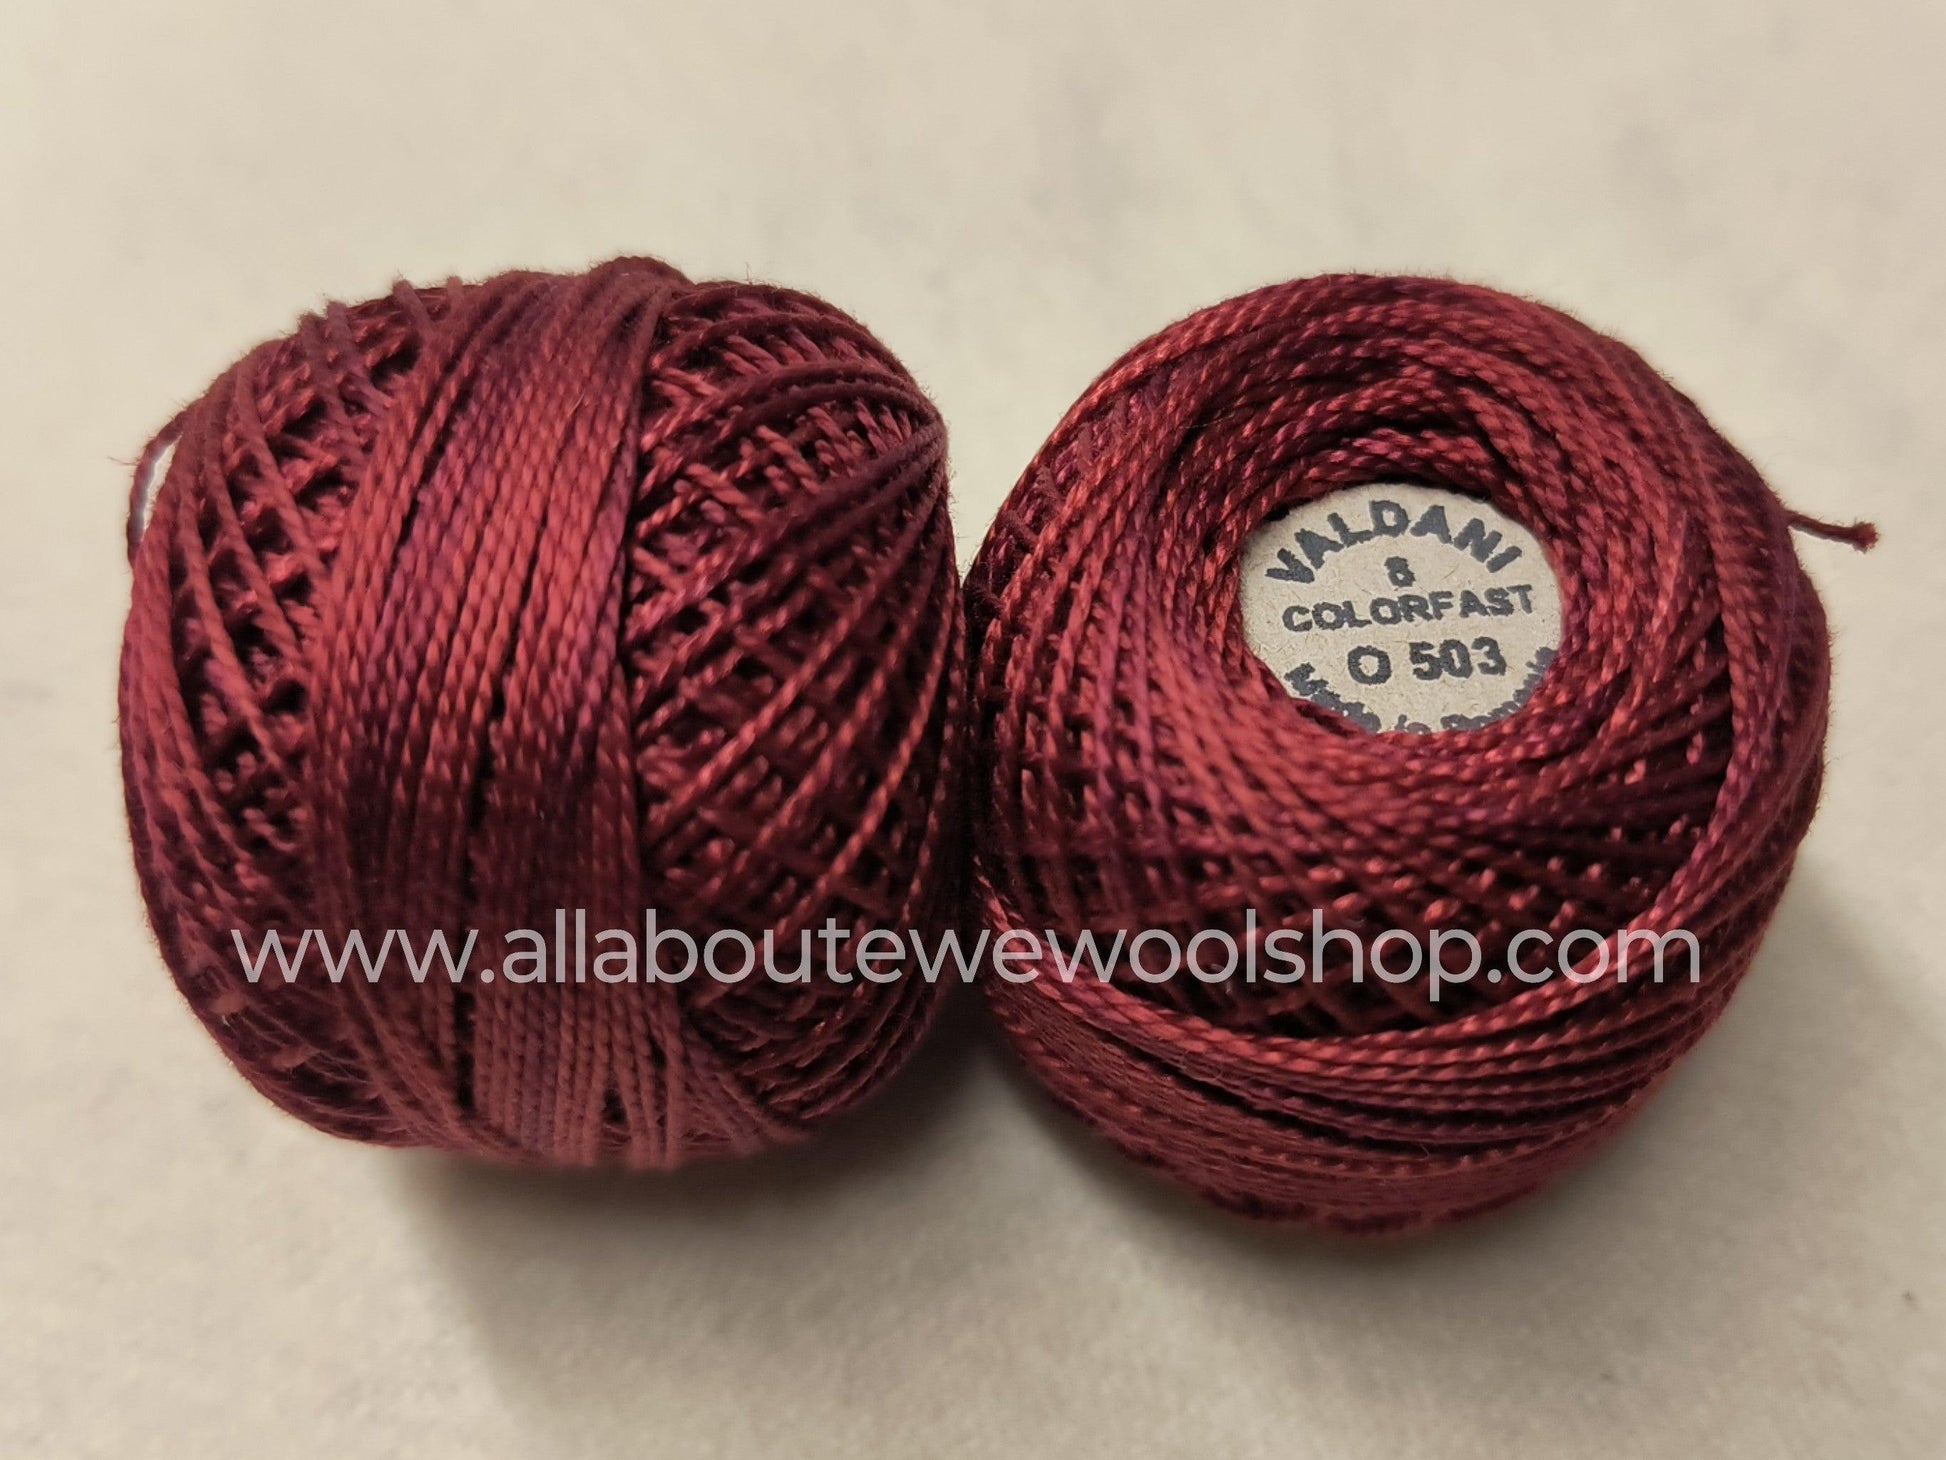 O503 #8 Valdani Pearl/Perle Cotton Thread - All About Ewe Wool Shop